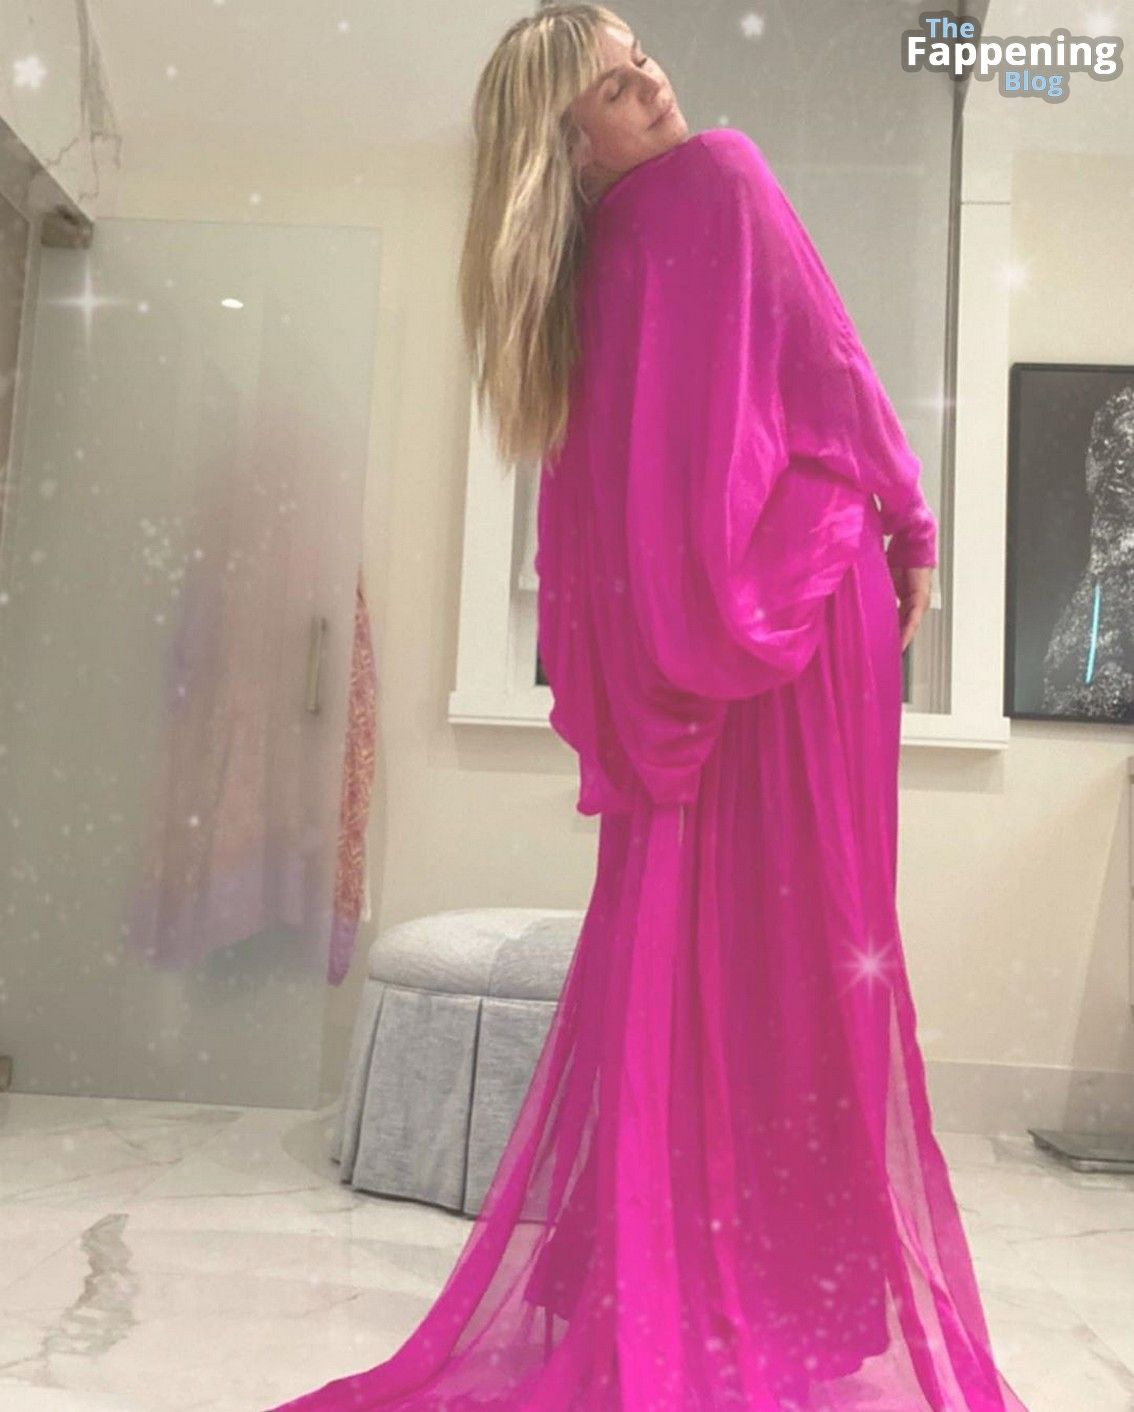 Heidi-Klum-Long-Legs-In-Her-Favorite-Dresses-TheFappeningBlog-11.jpg